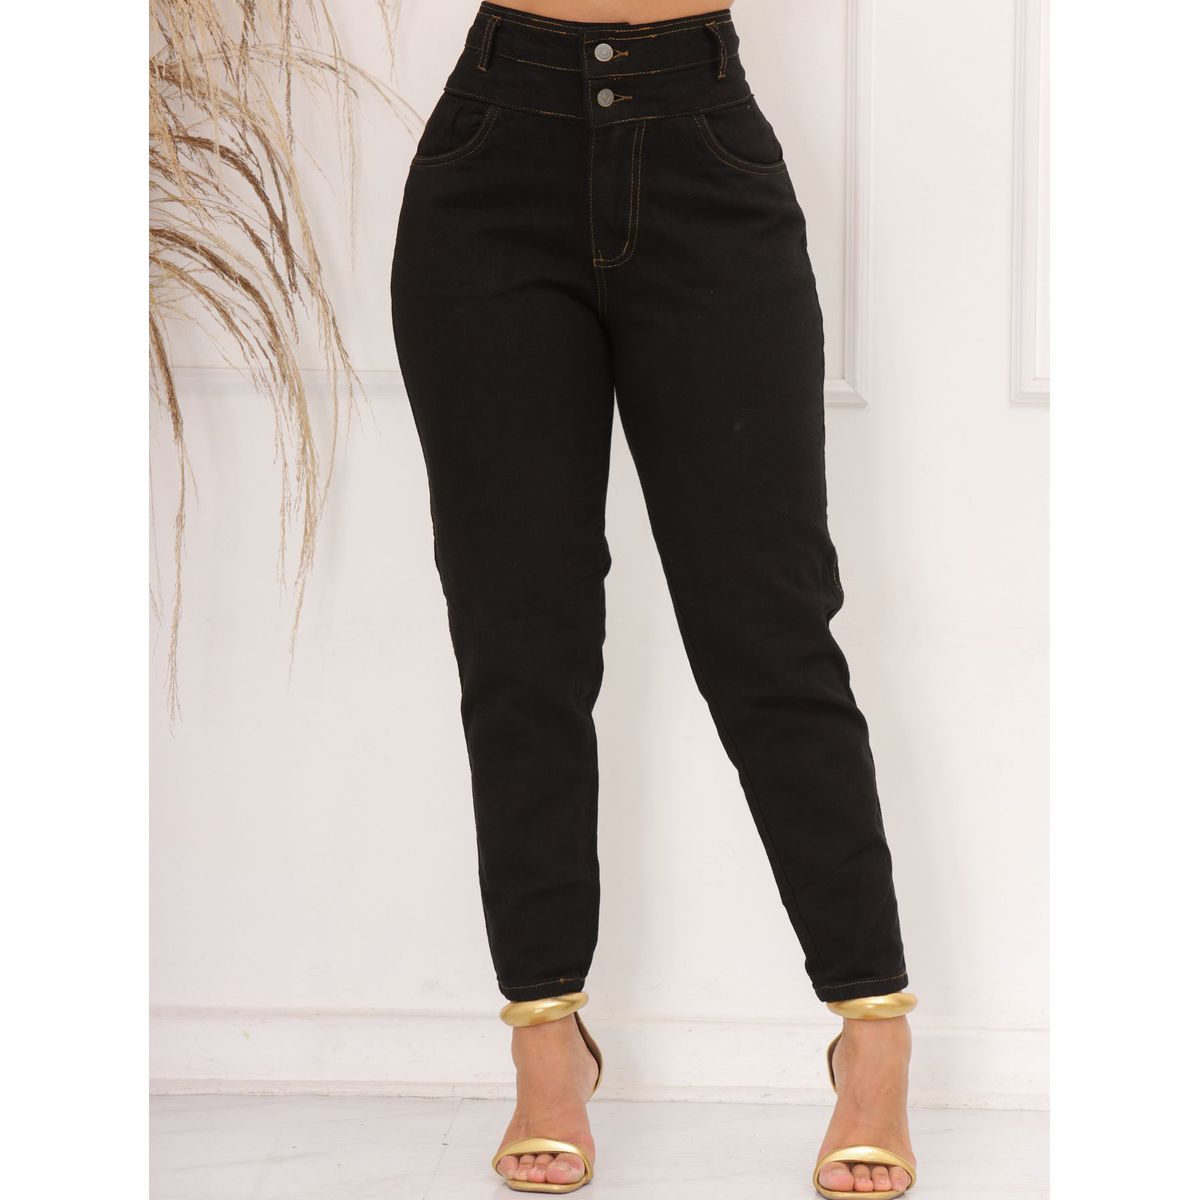 Forever Jeans - Pantalón Sport Elegante, para dama, cintura alta